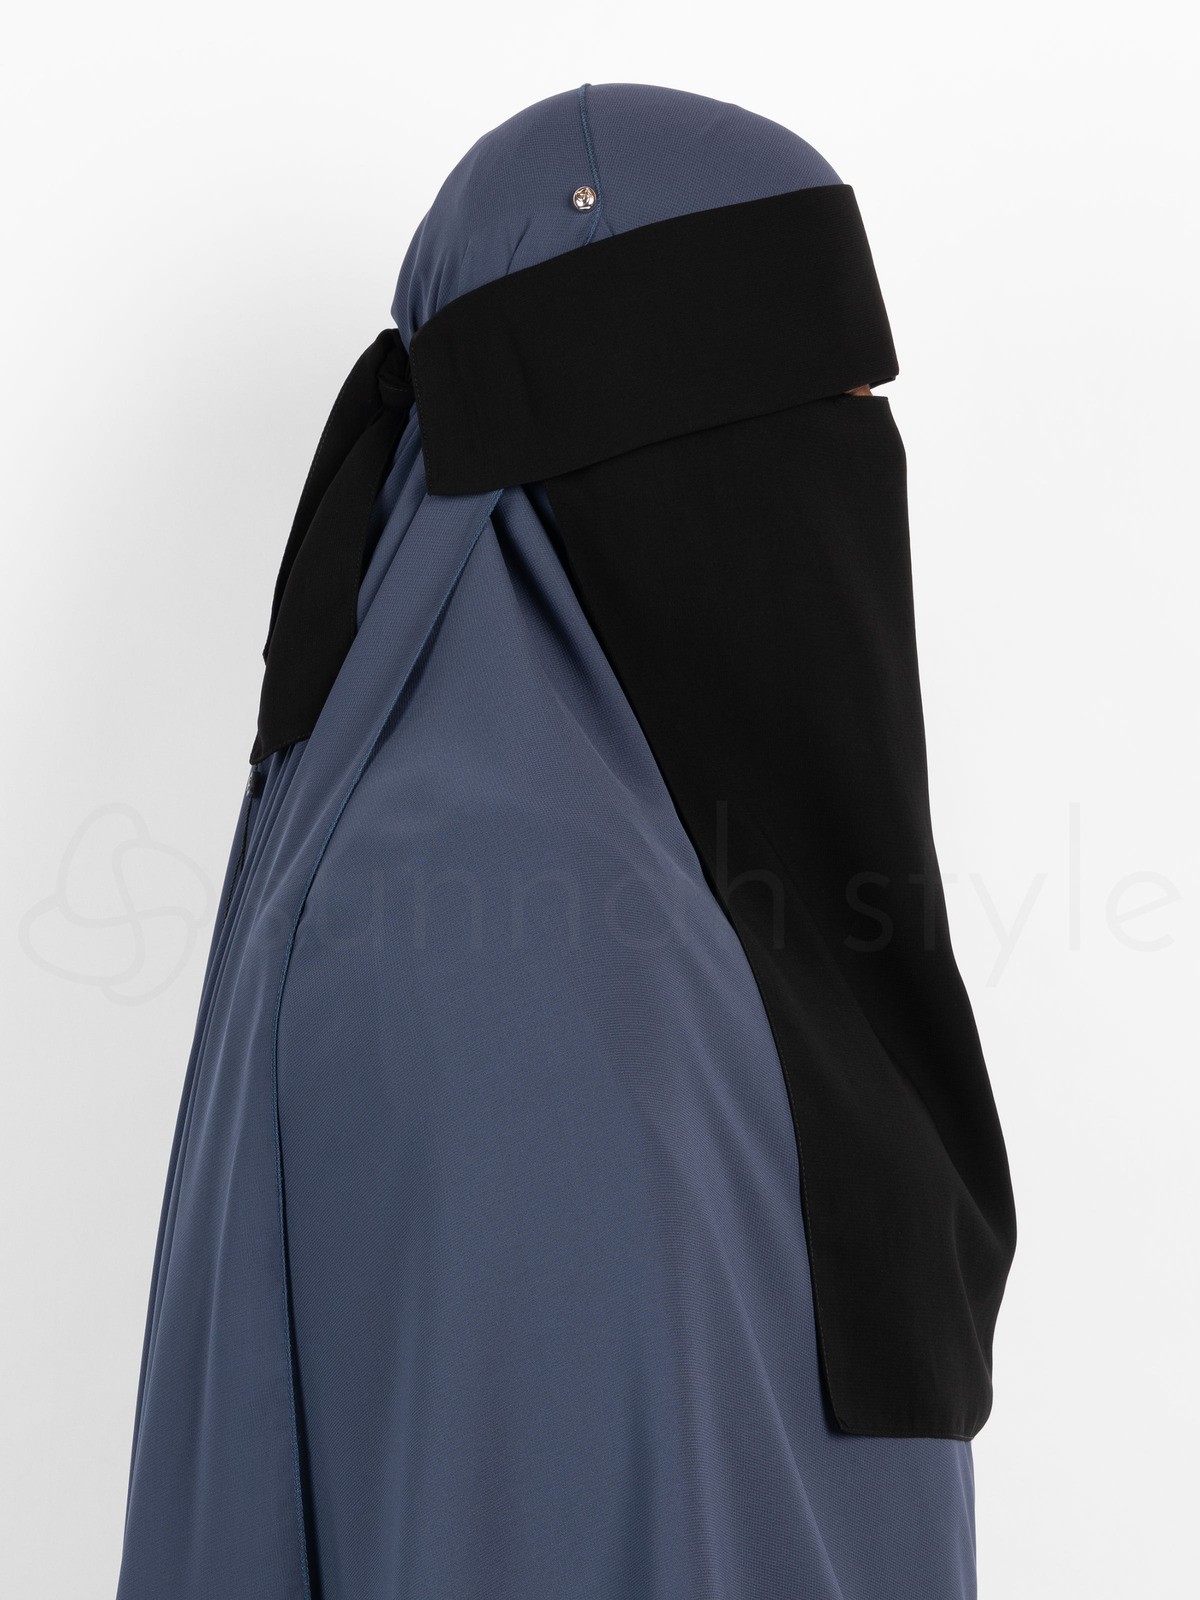 Sunnah Style - One Layer Flap Niqab (Black)